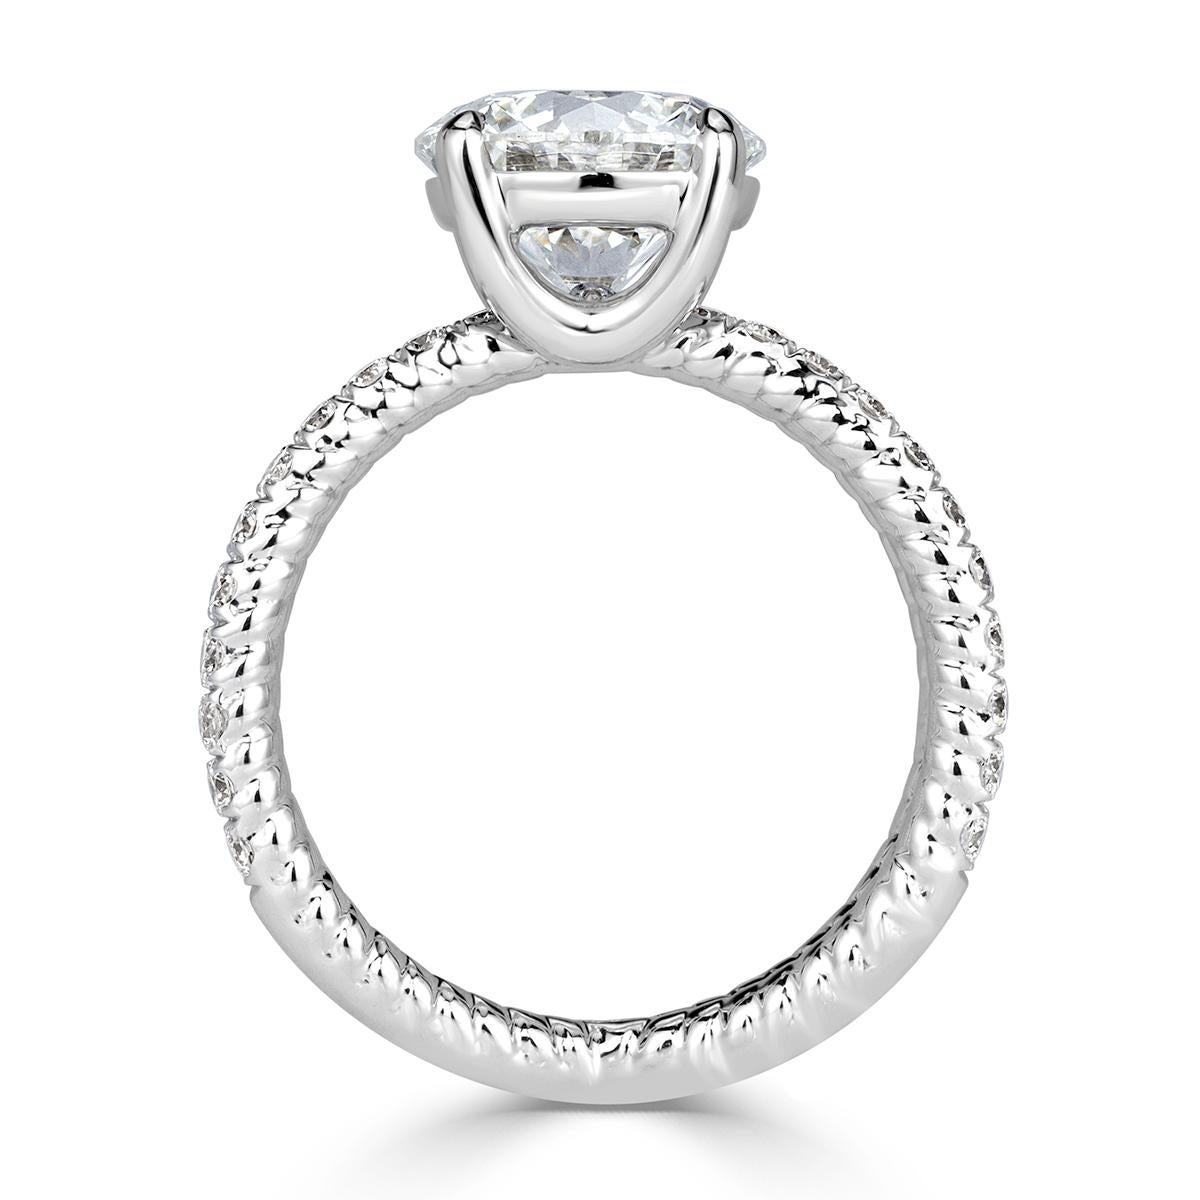 Women's or Men's Mark Broumand 3.55 Carat Round Brilliant Cut Diamond Engagement Ring